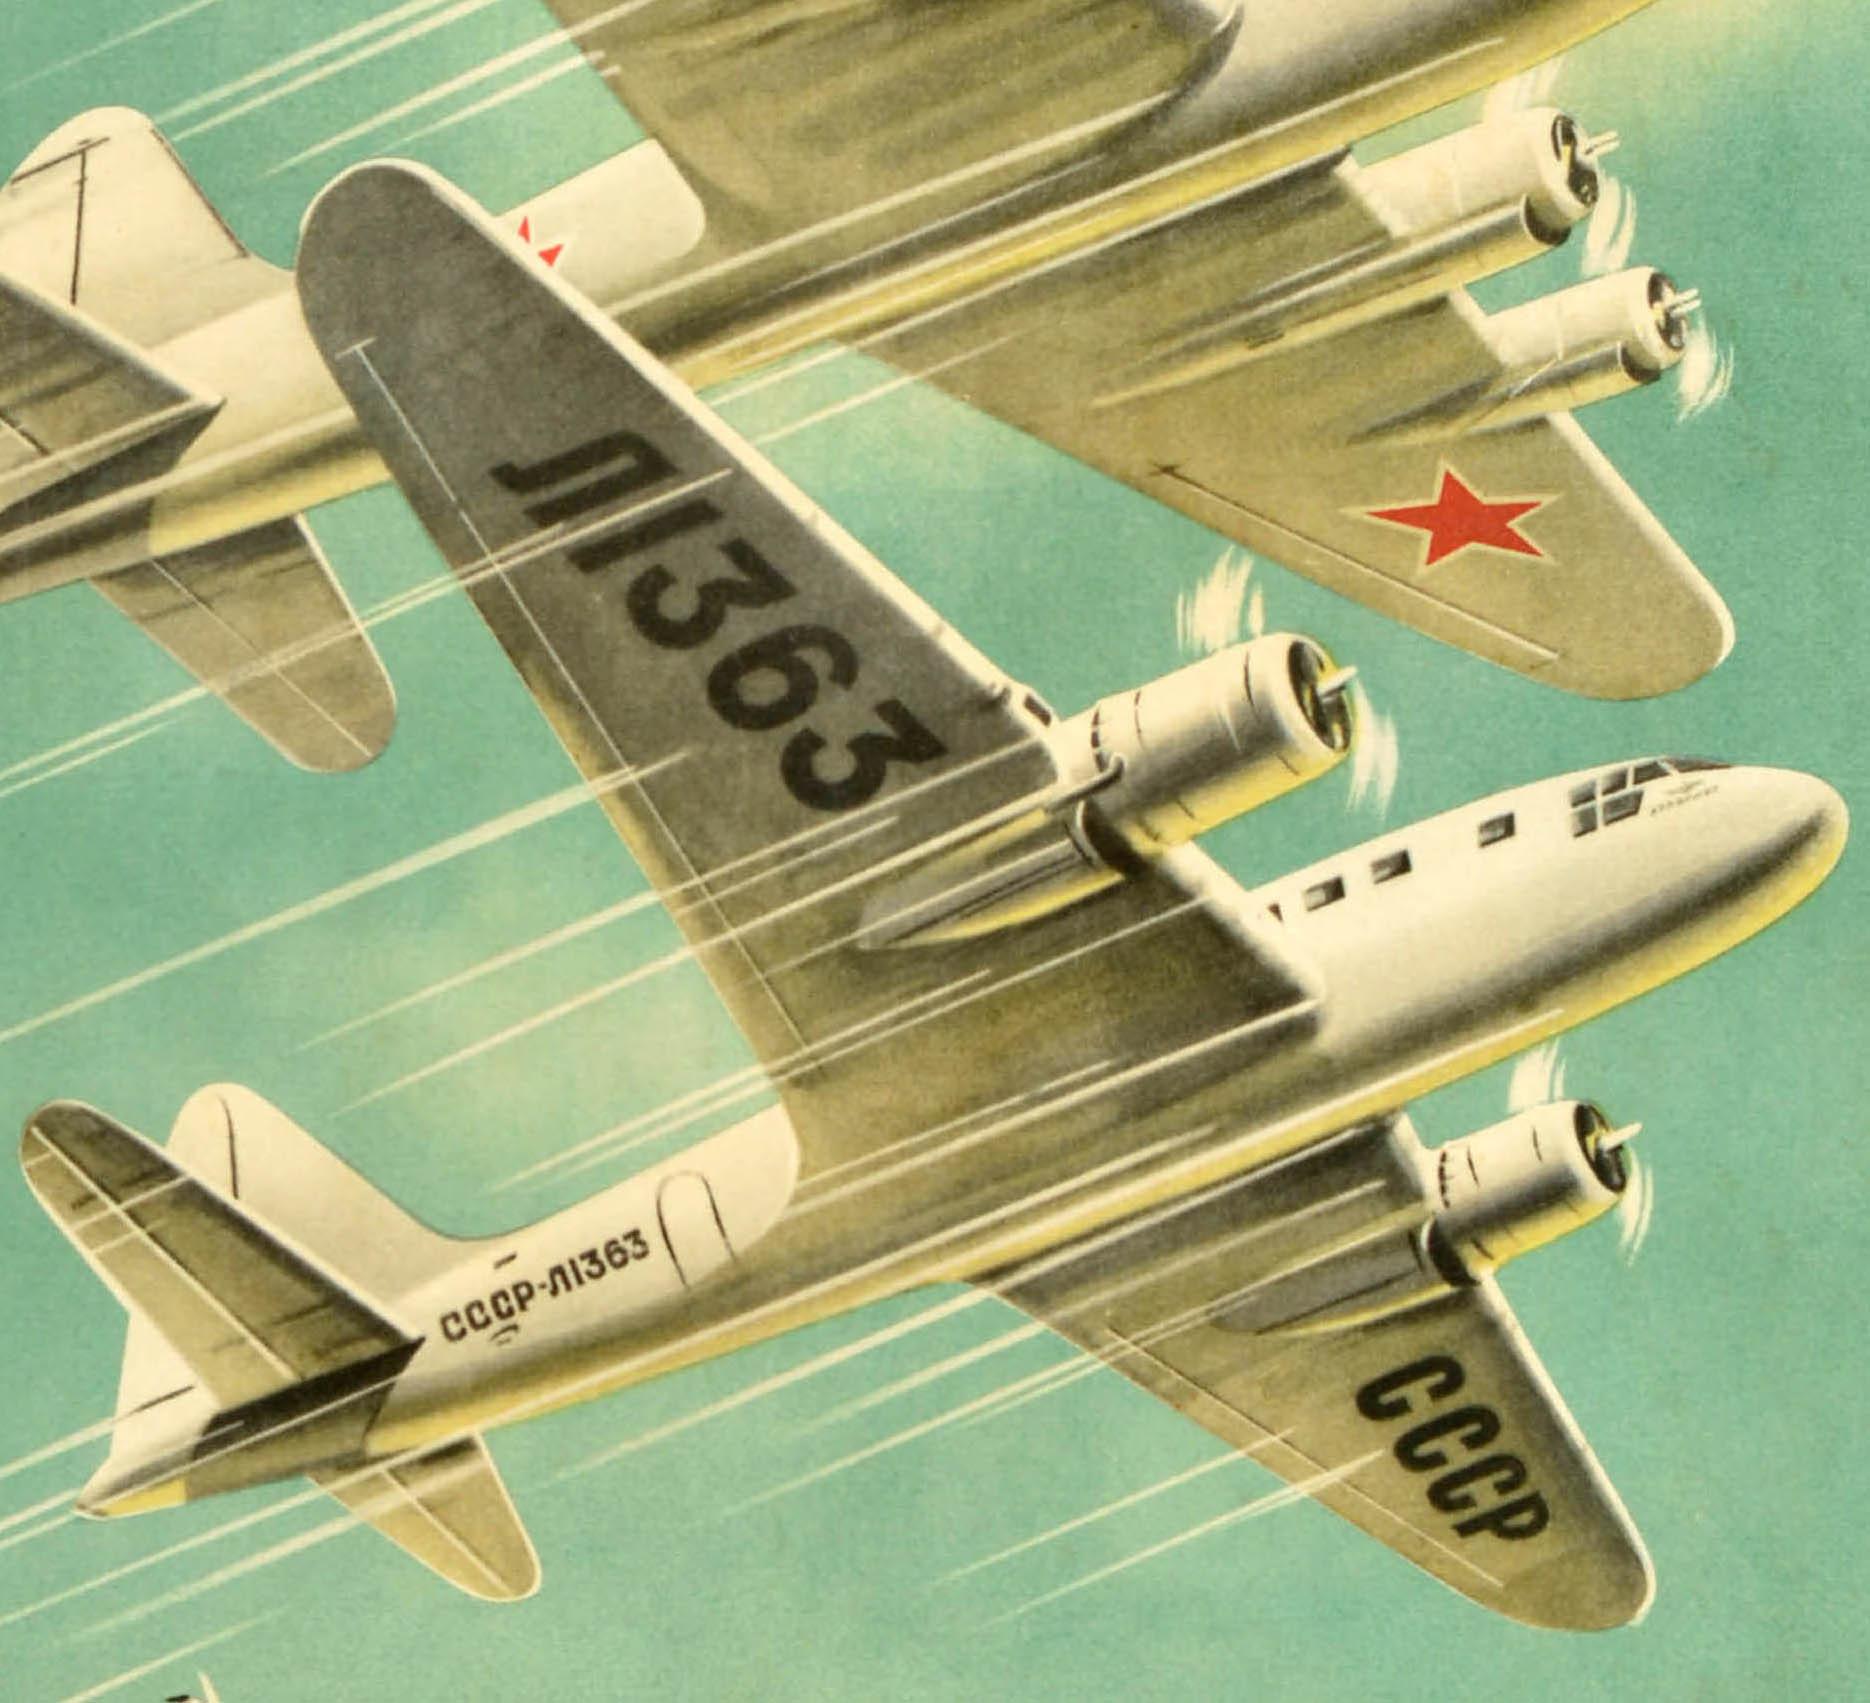 Original Vintage Aviation Propaganda Poster Glory To Mighty Soviet Airforce USSR - Print by V. Viktorov